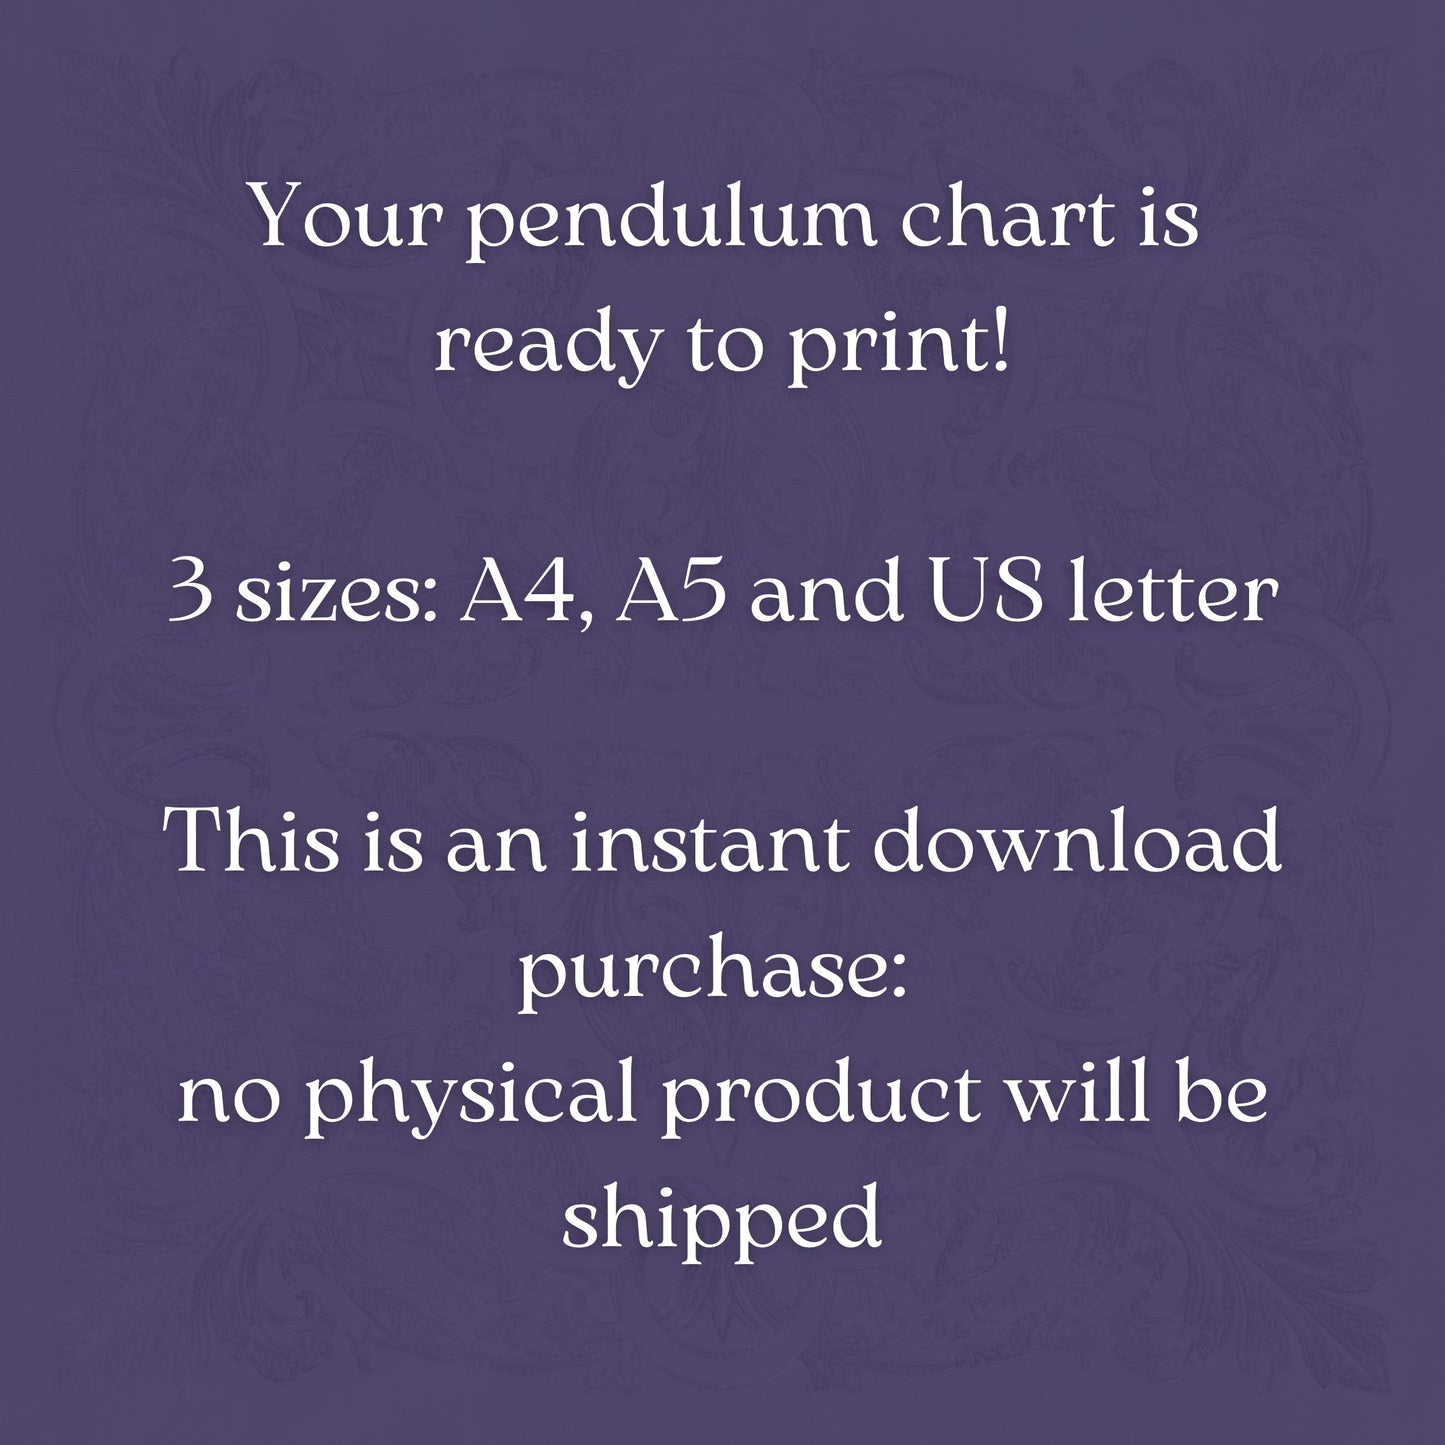 Subtle bodies pendulum chart energy healing pendulum board printable for reiki magnetism A4 A5 US letter PDF